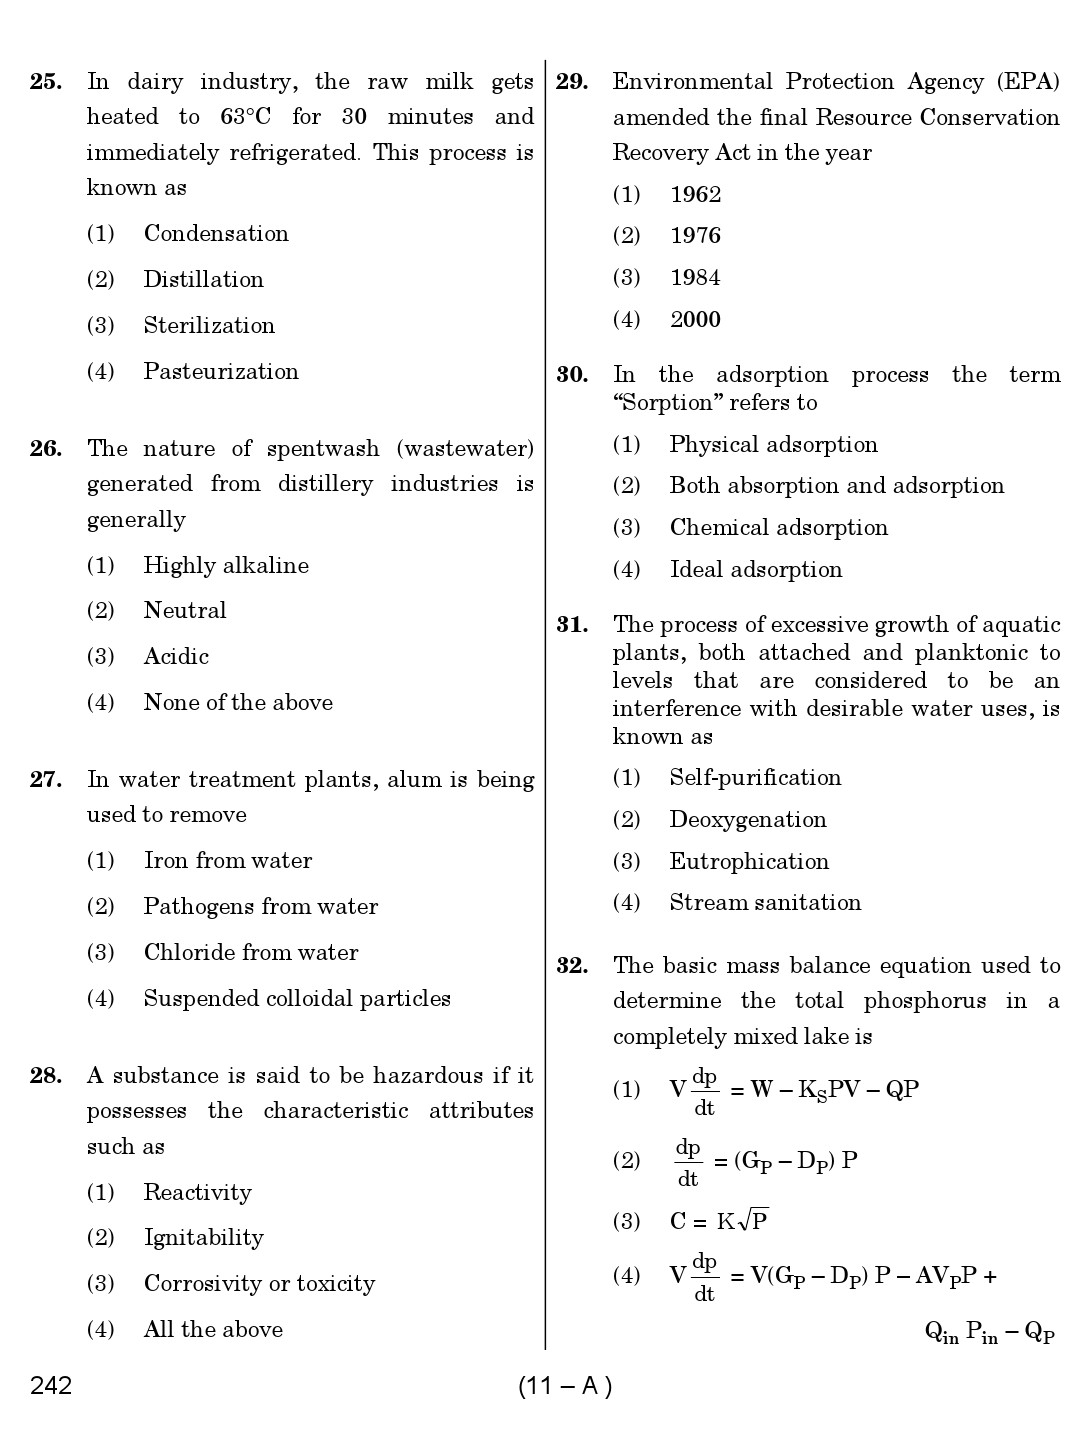 Karnataka PSC Environmental Engineer Exam Sample Question Paper 11